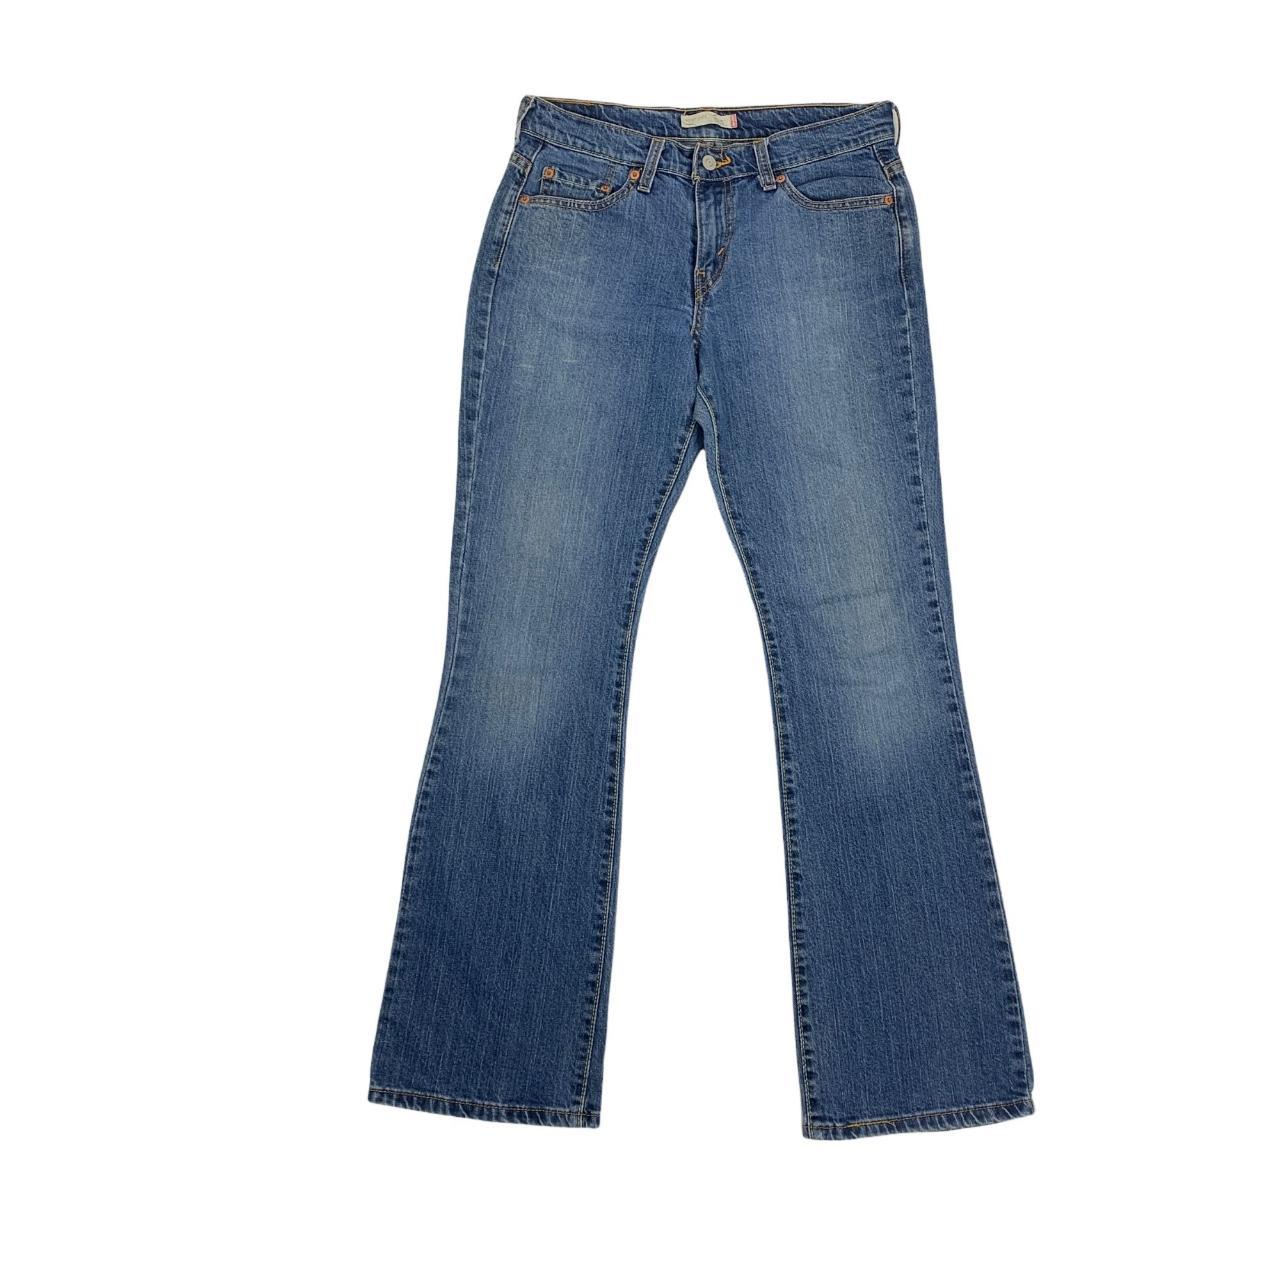 .Levi's 515 - boot cut, classic jeans. No holes or... - Depop